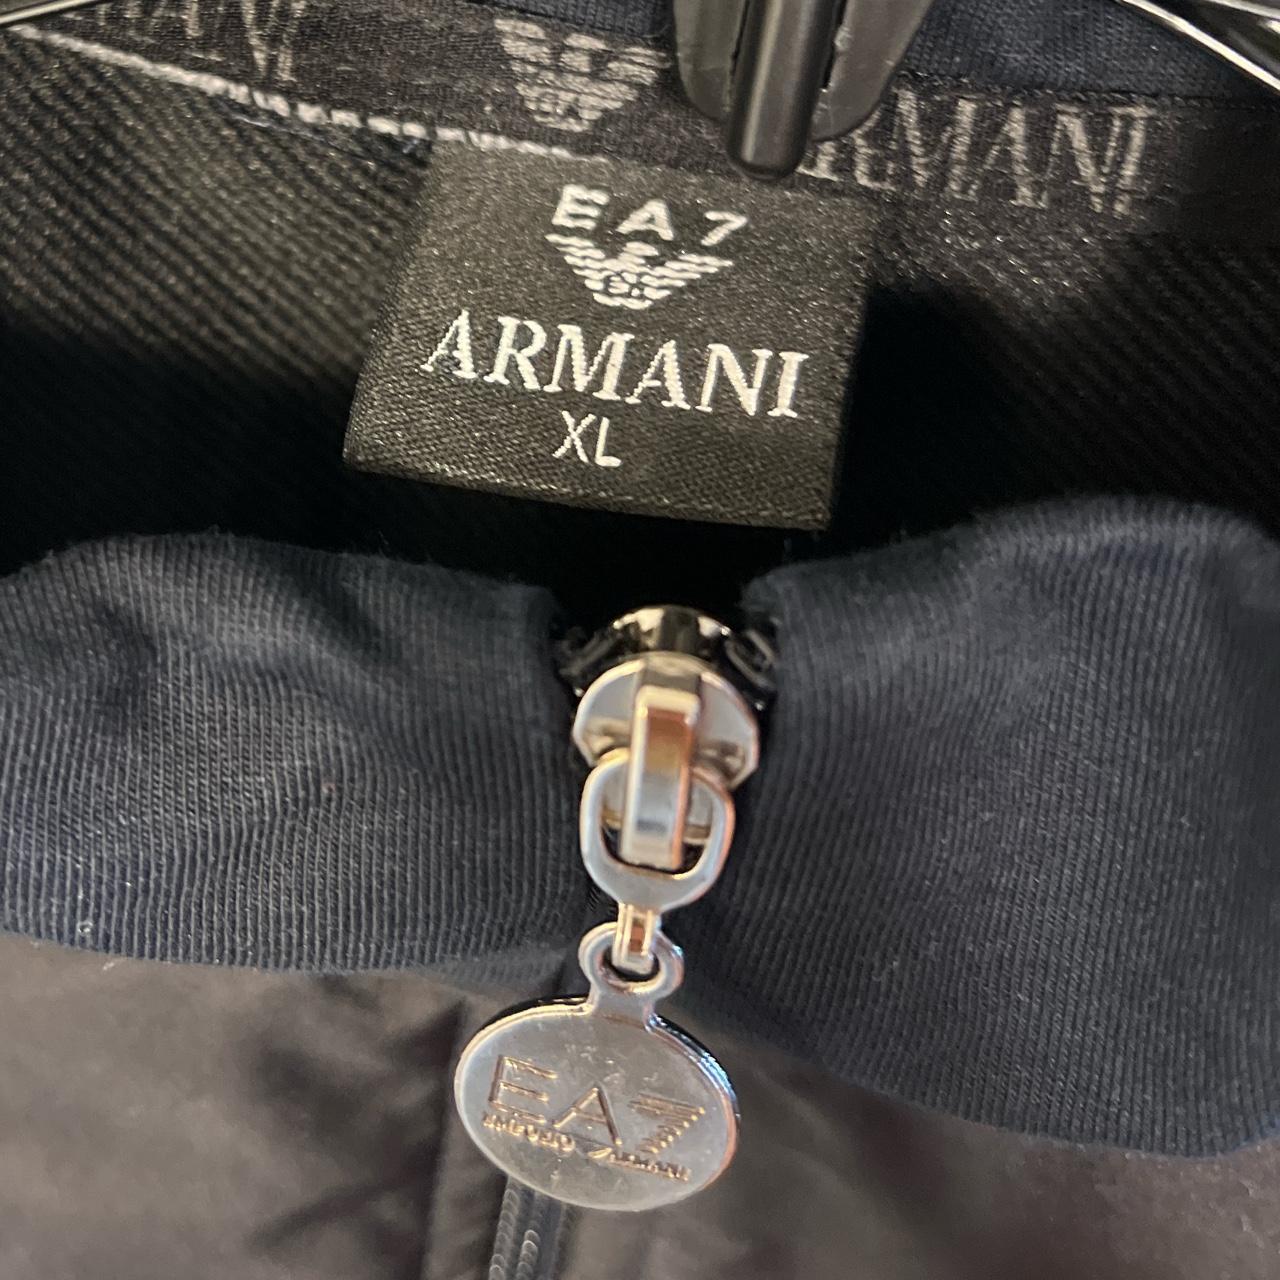 Armani Men's Black and White Jacket (2)